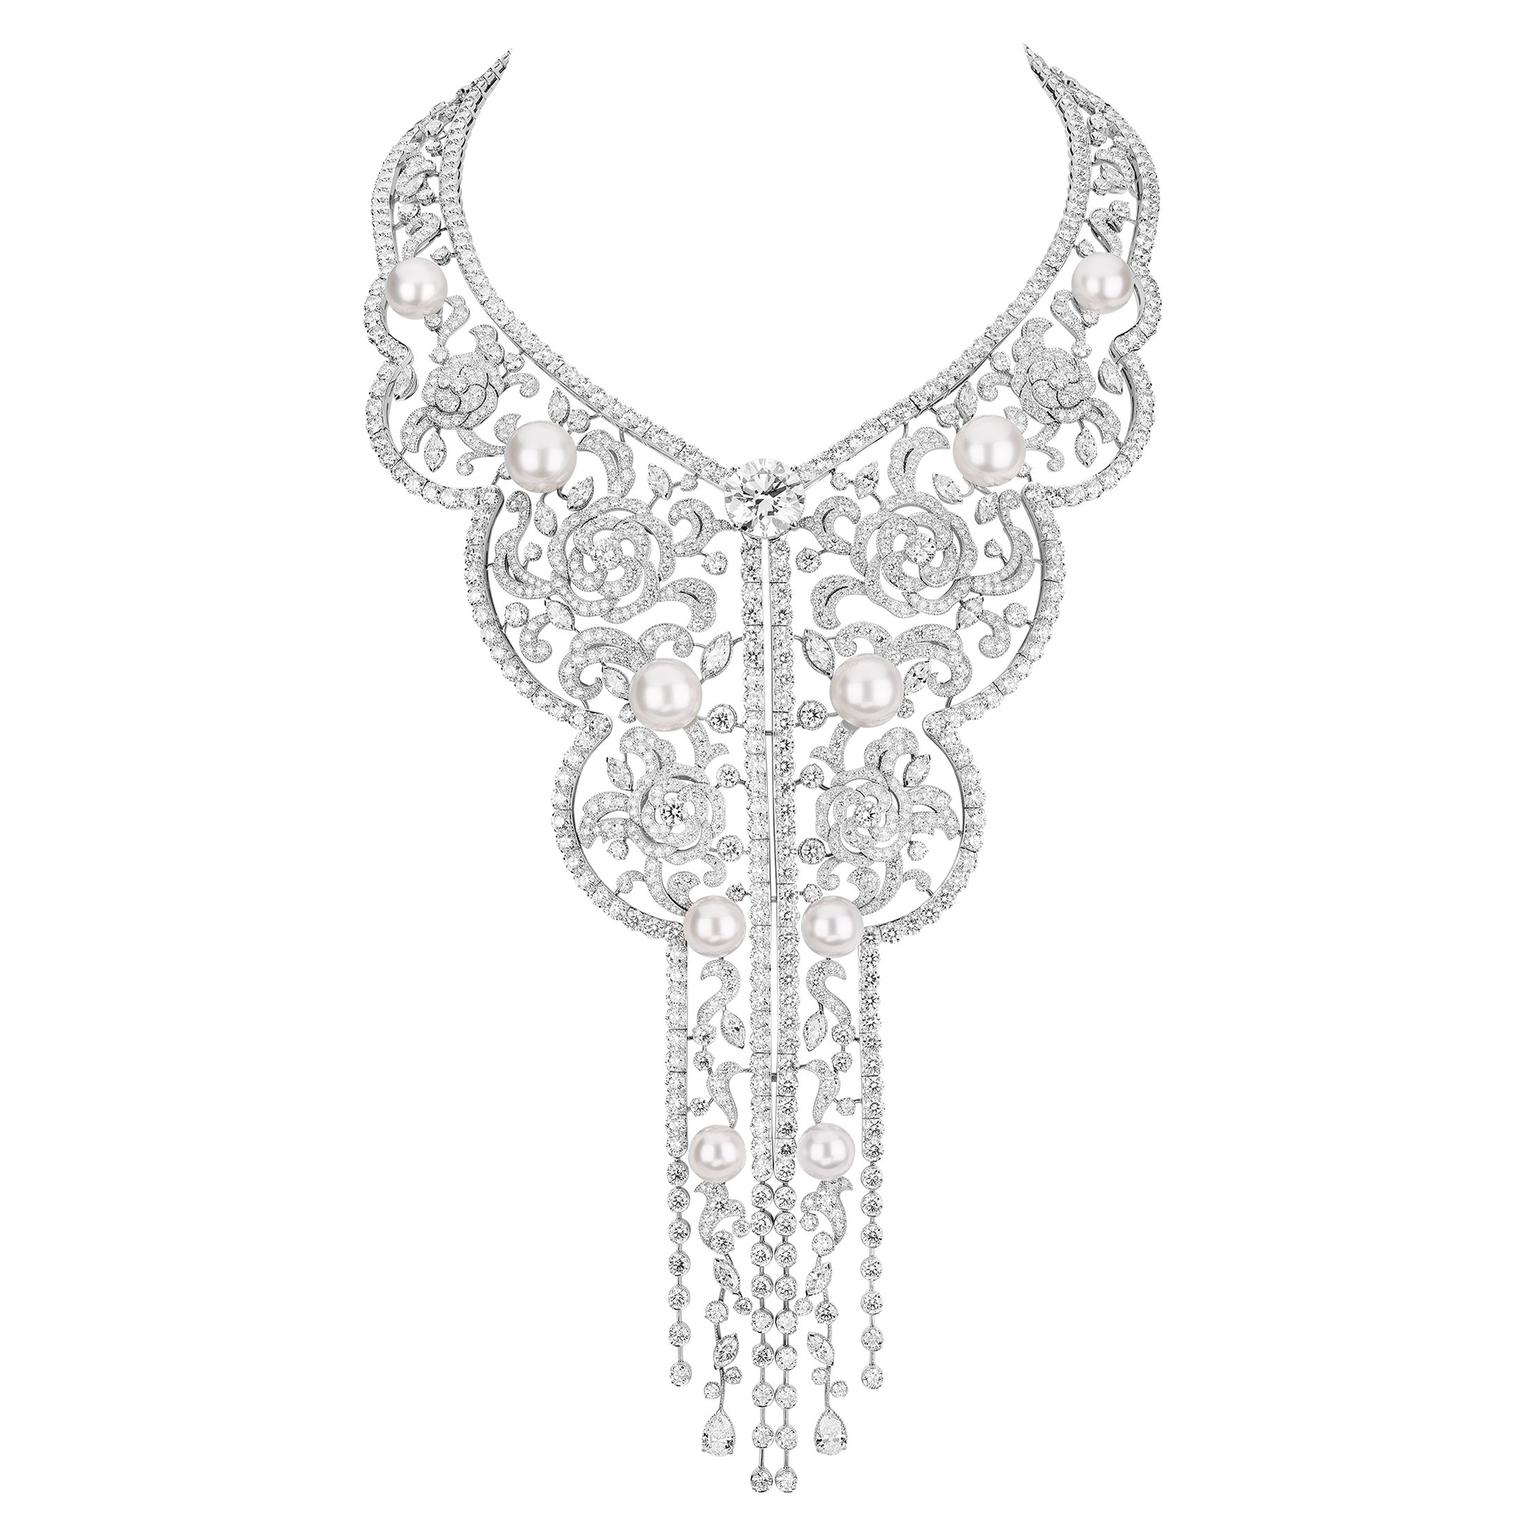 Sarafane necklace Chanel 2019